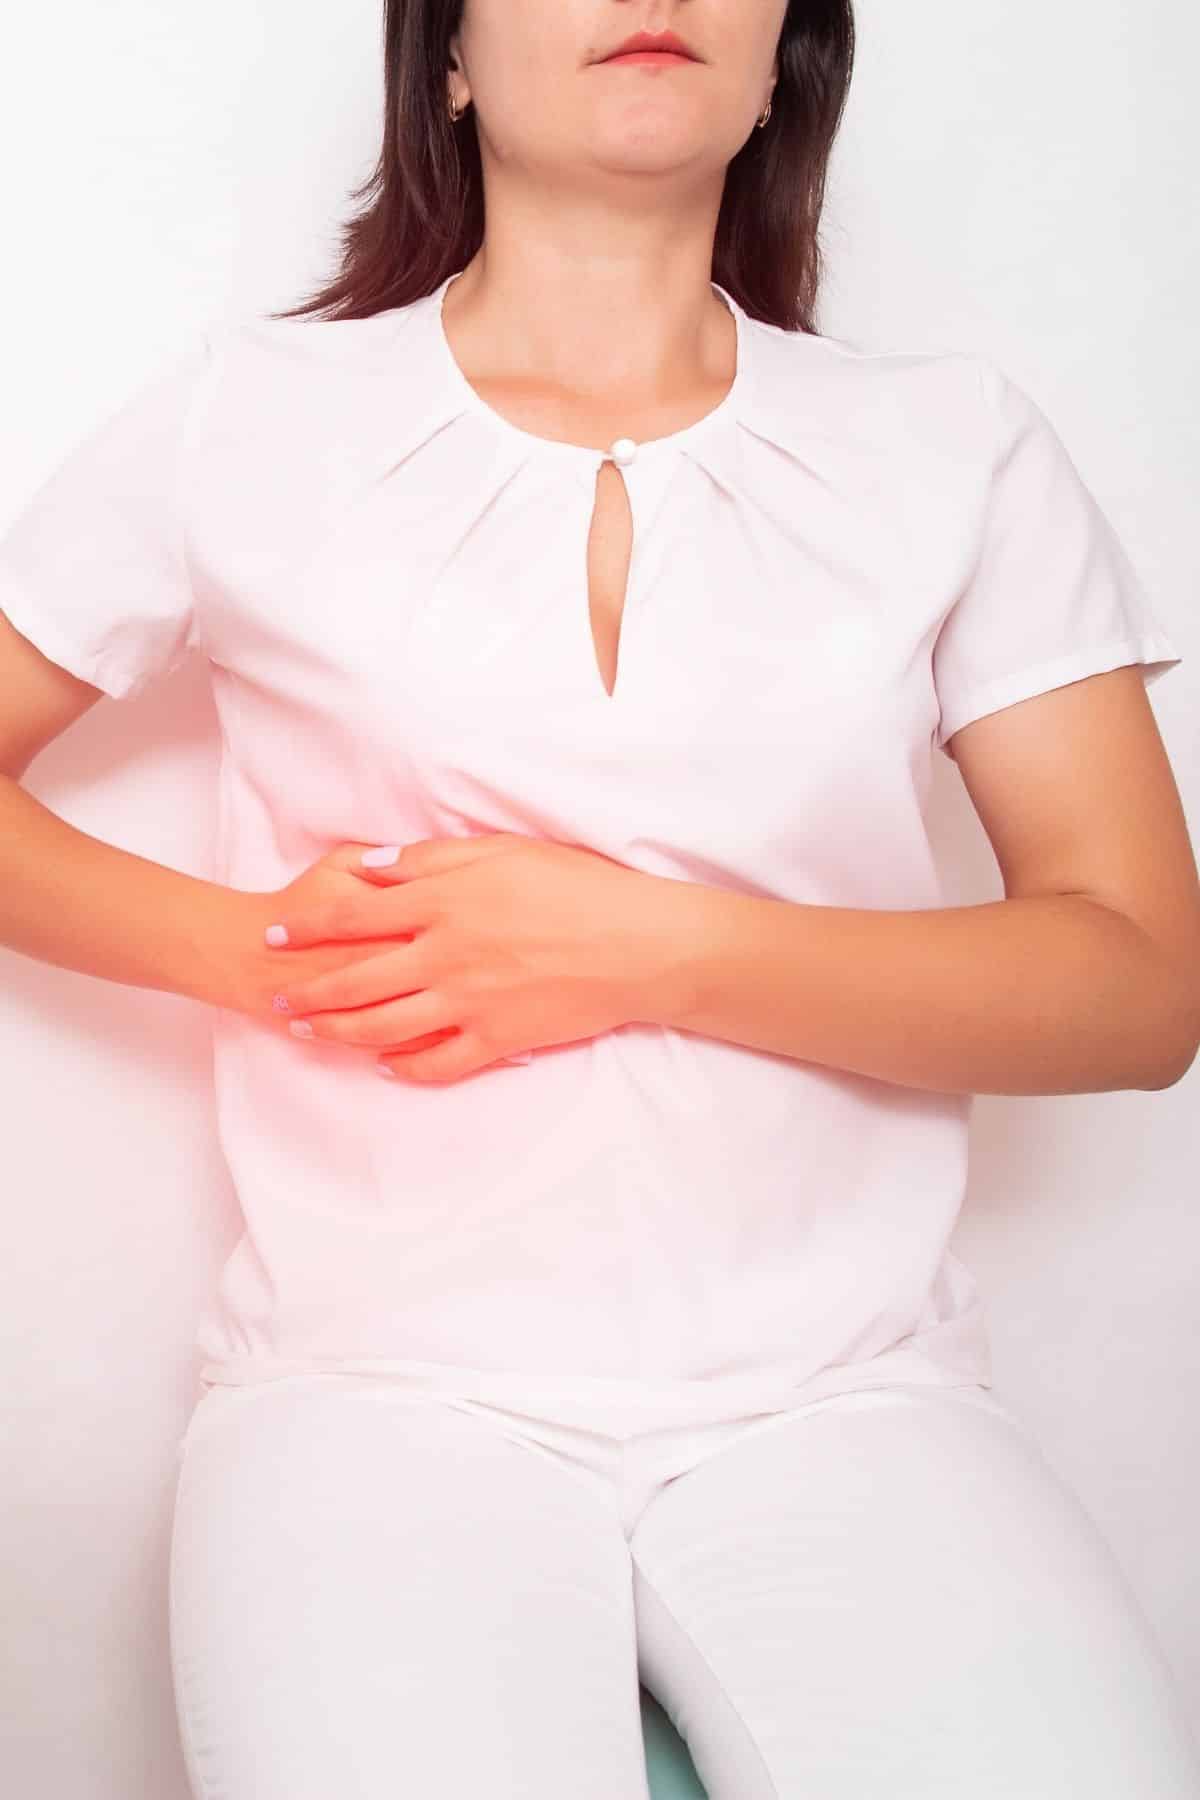 woman with gallbladder disease holding her abdomen.